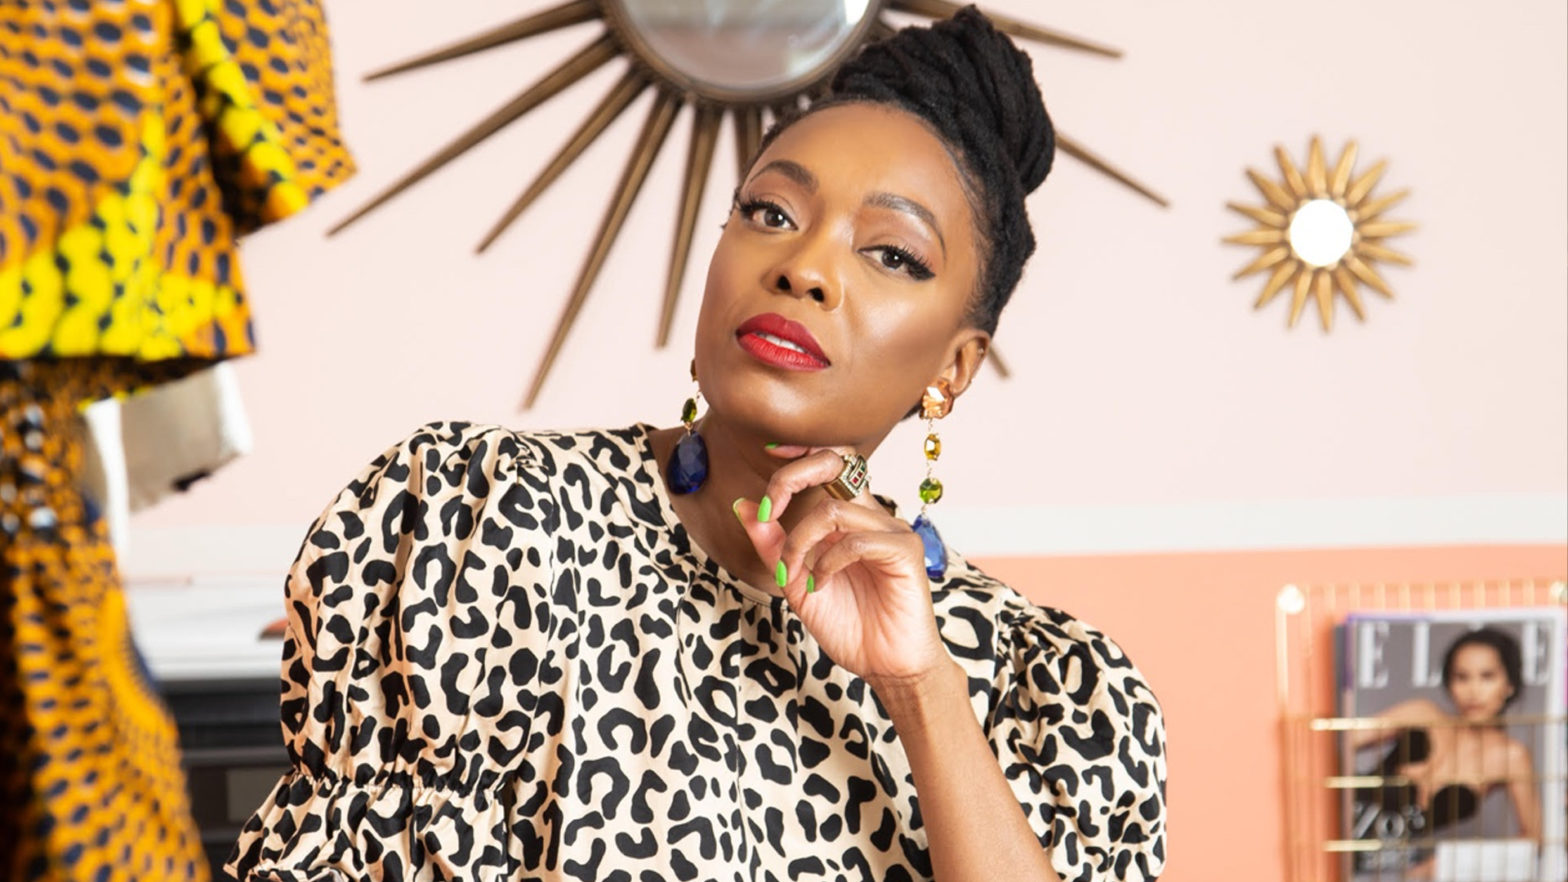 Nigerian-American Fashion Designer Autumn Adeigbo Raises Nearly $3M In Funding Round